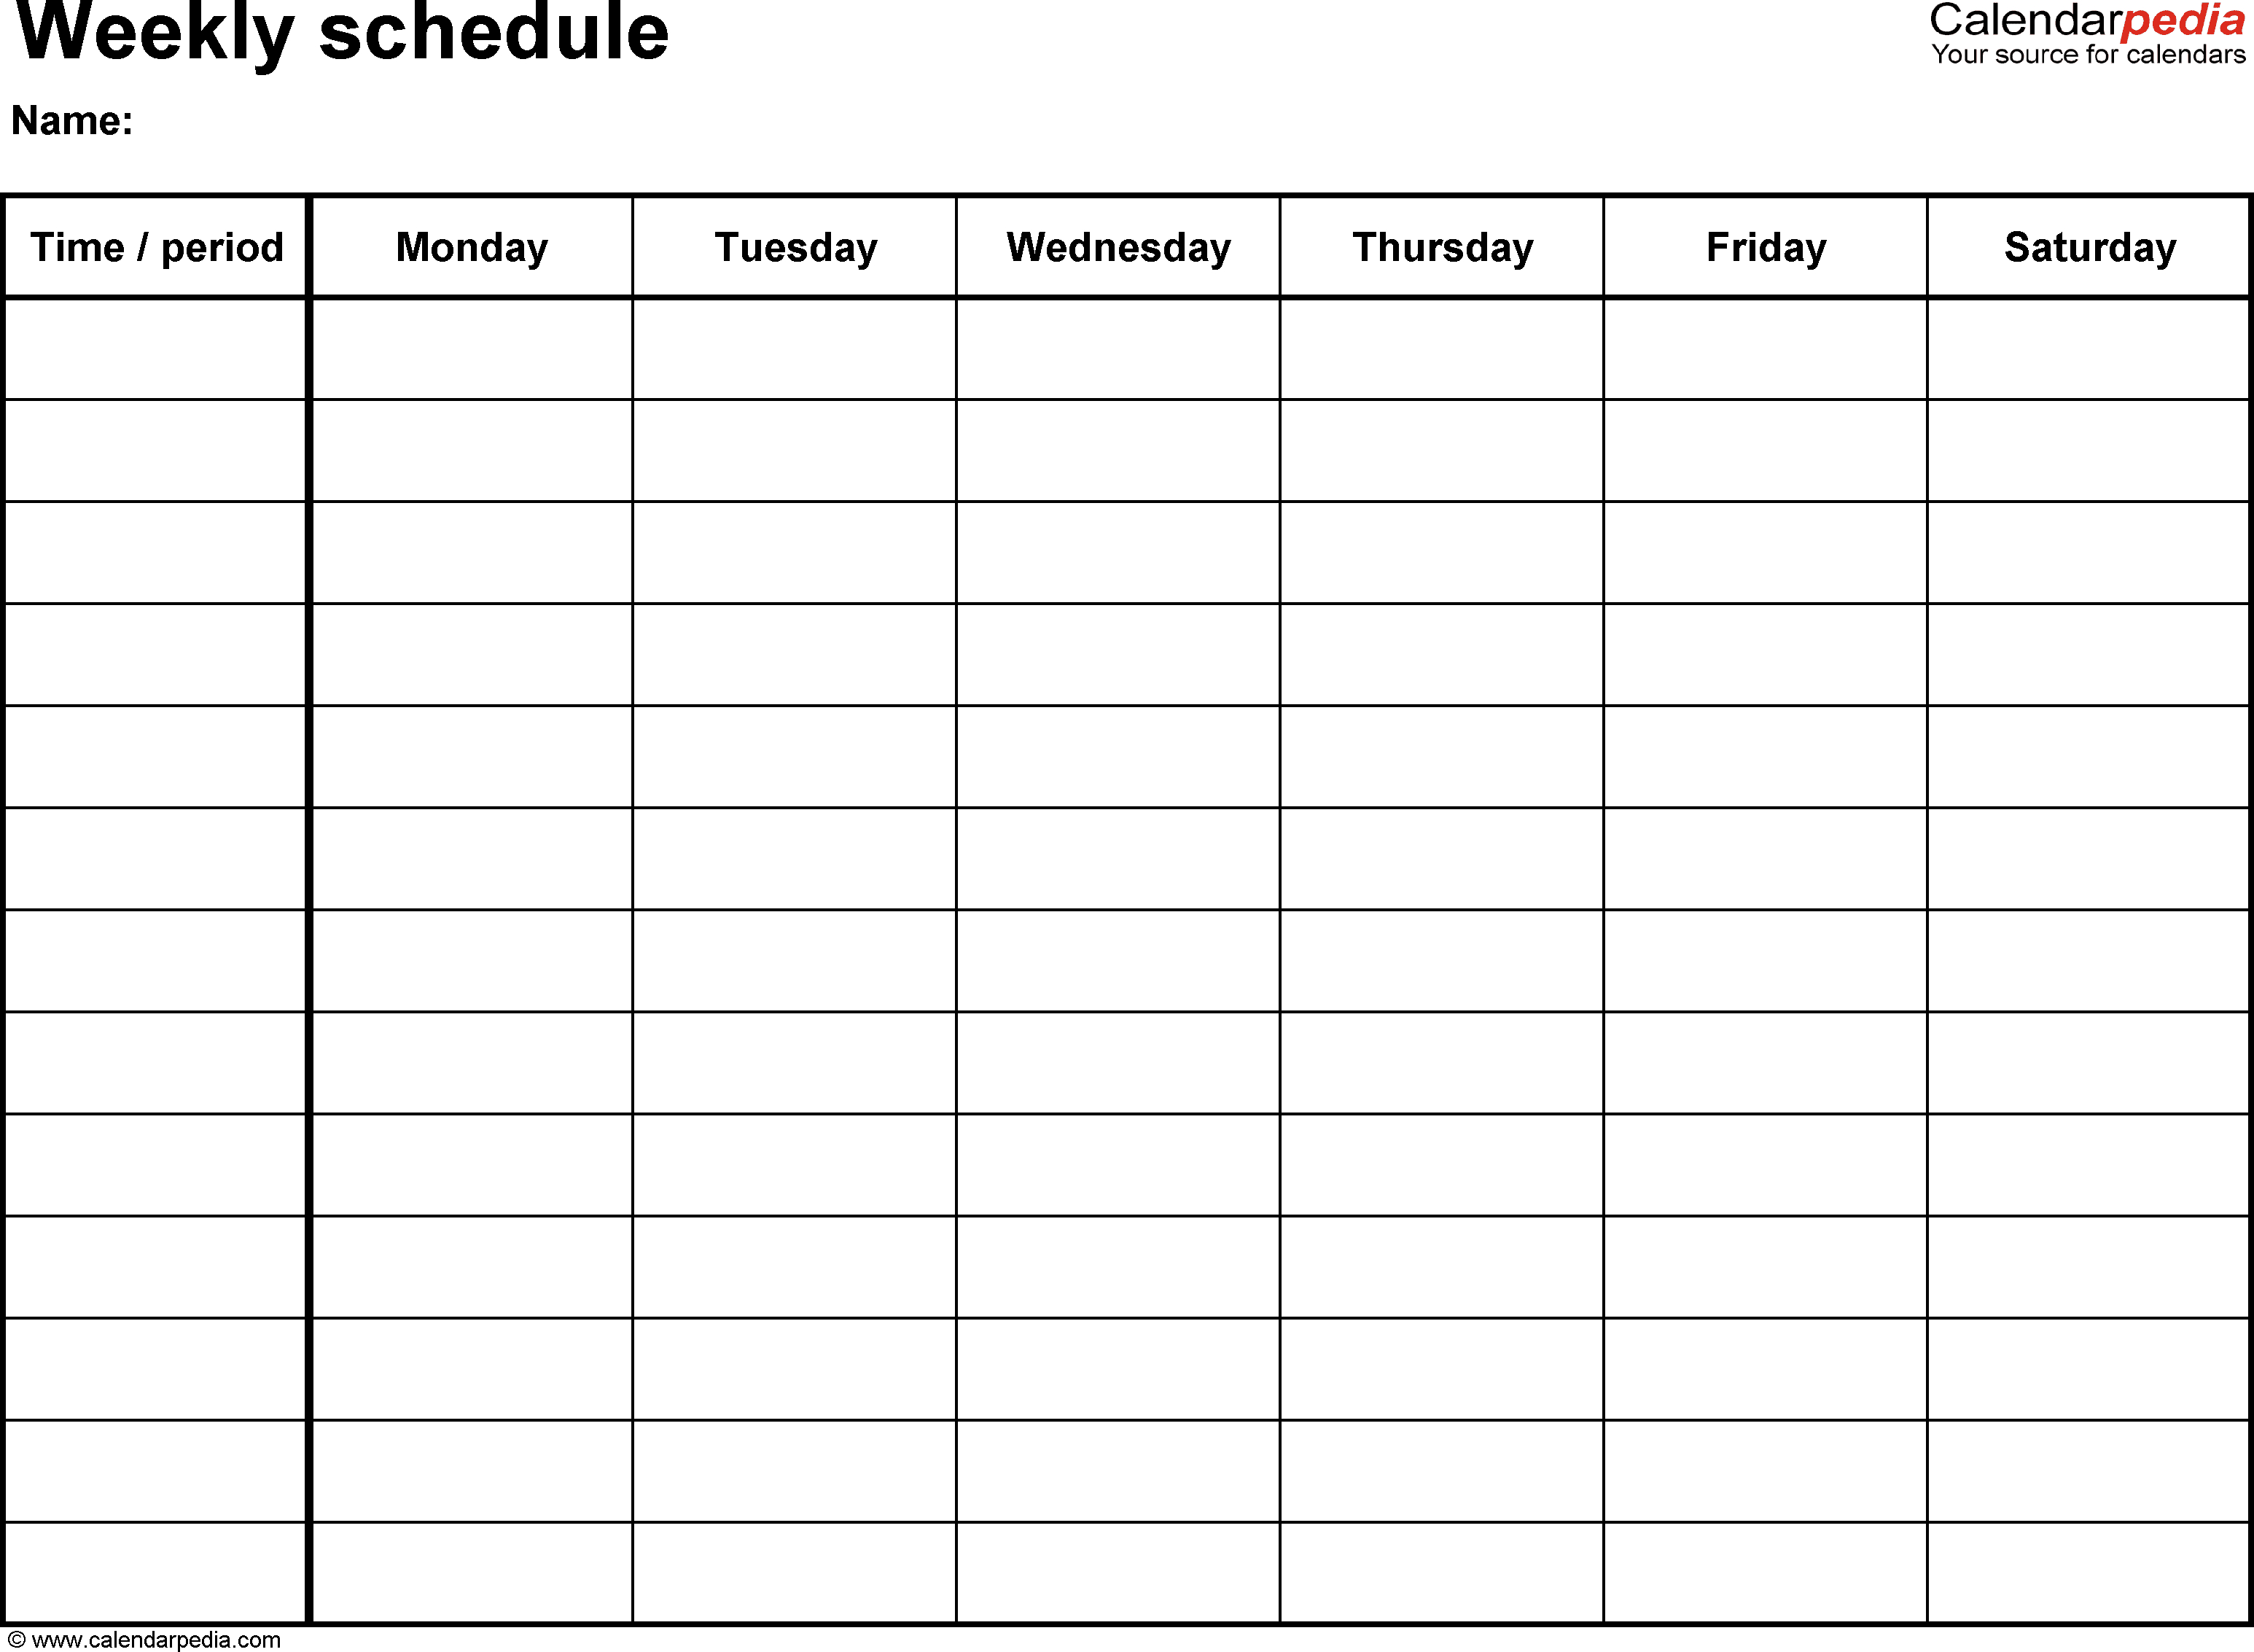 one-week-calendar-printable-calendar-for-planning